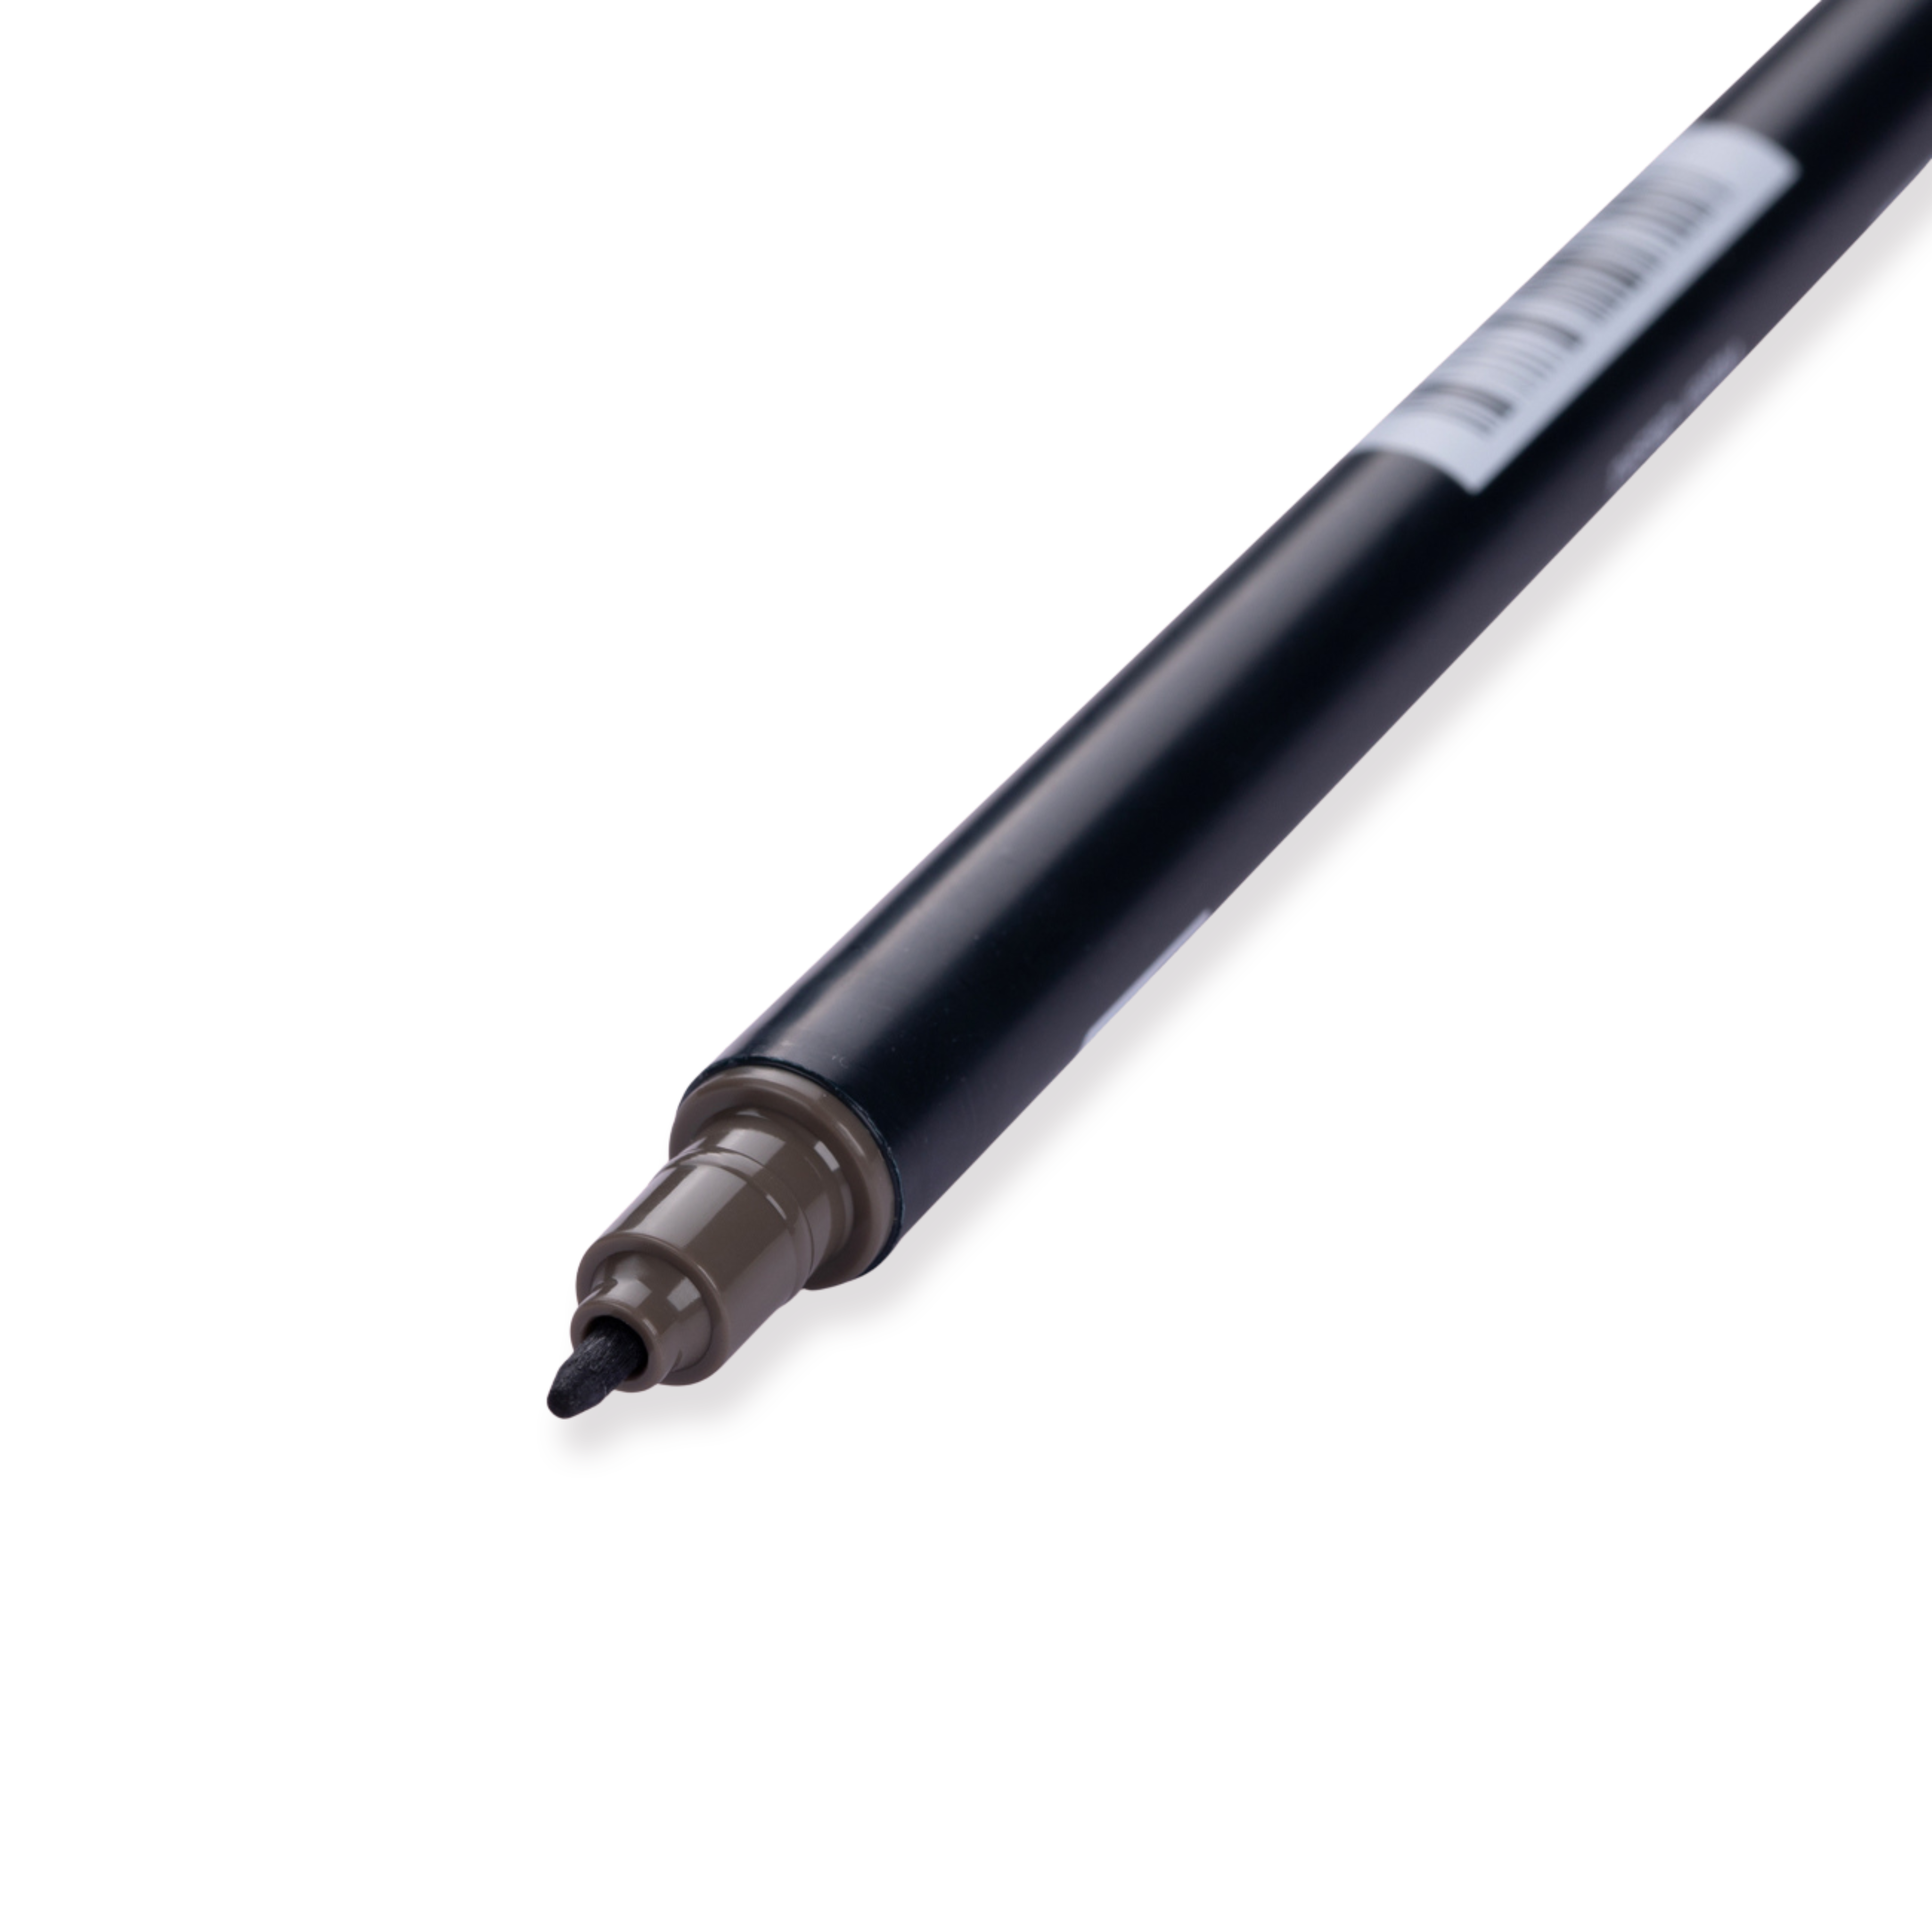 Tombow Dual Brush Pen Graustufen - N49 - Warmes Grau 8